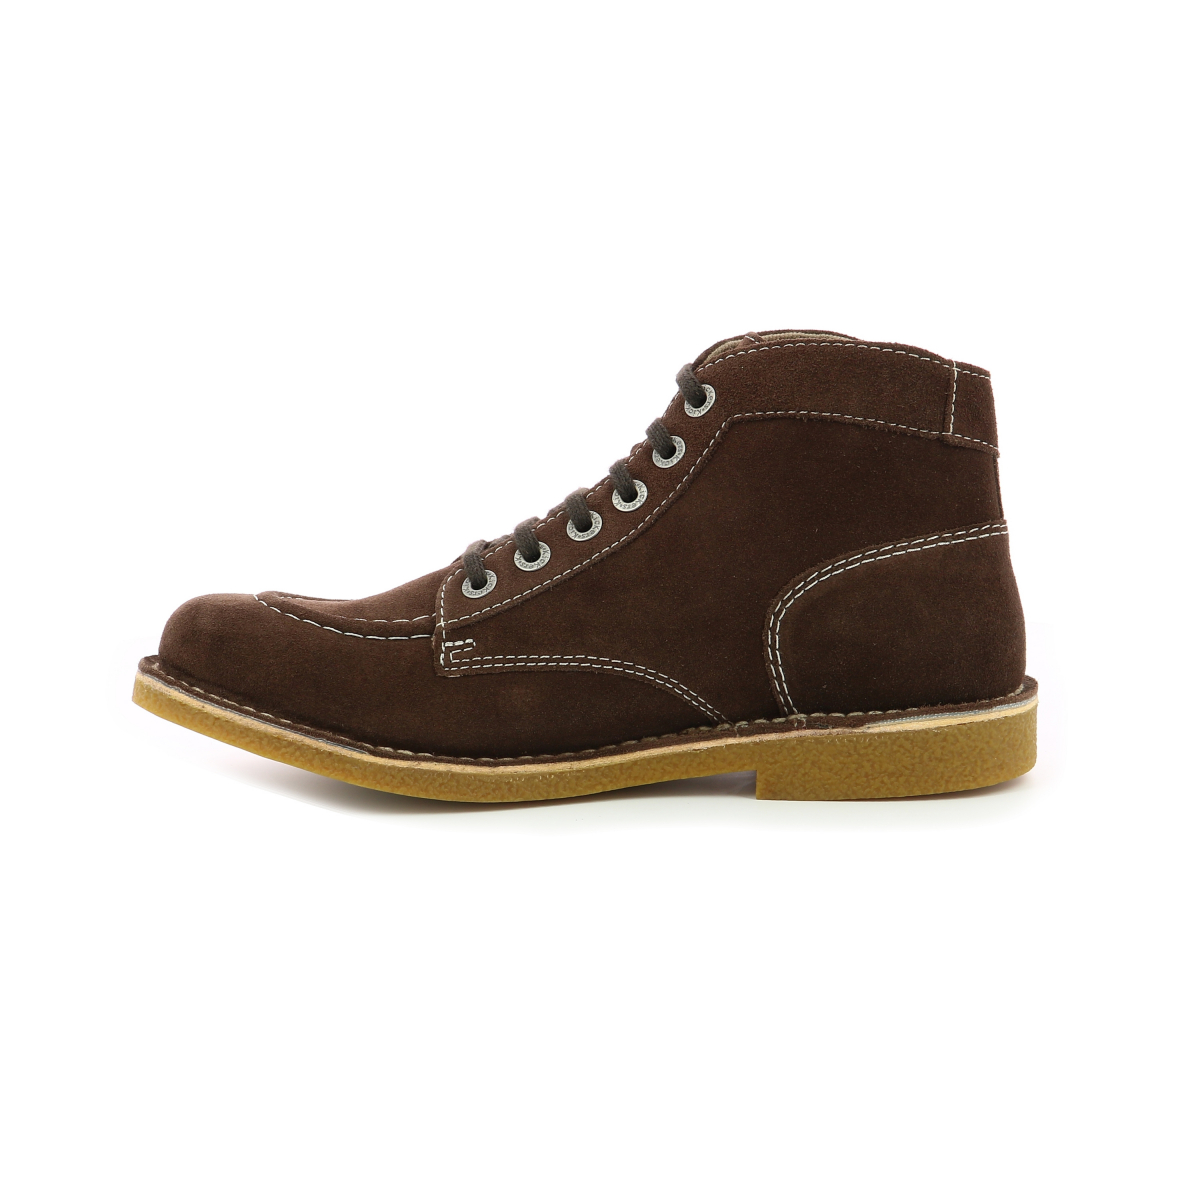 Kickstoner dark brown - Ankle boots for men - Kickers © Official website